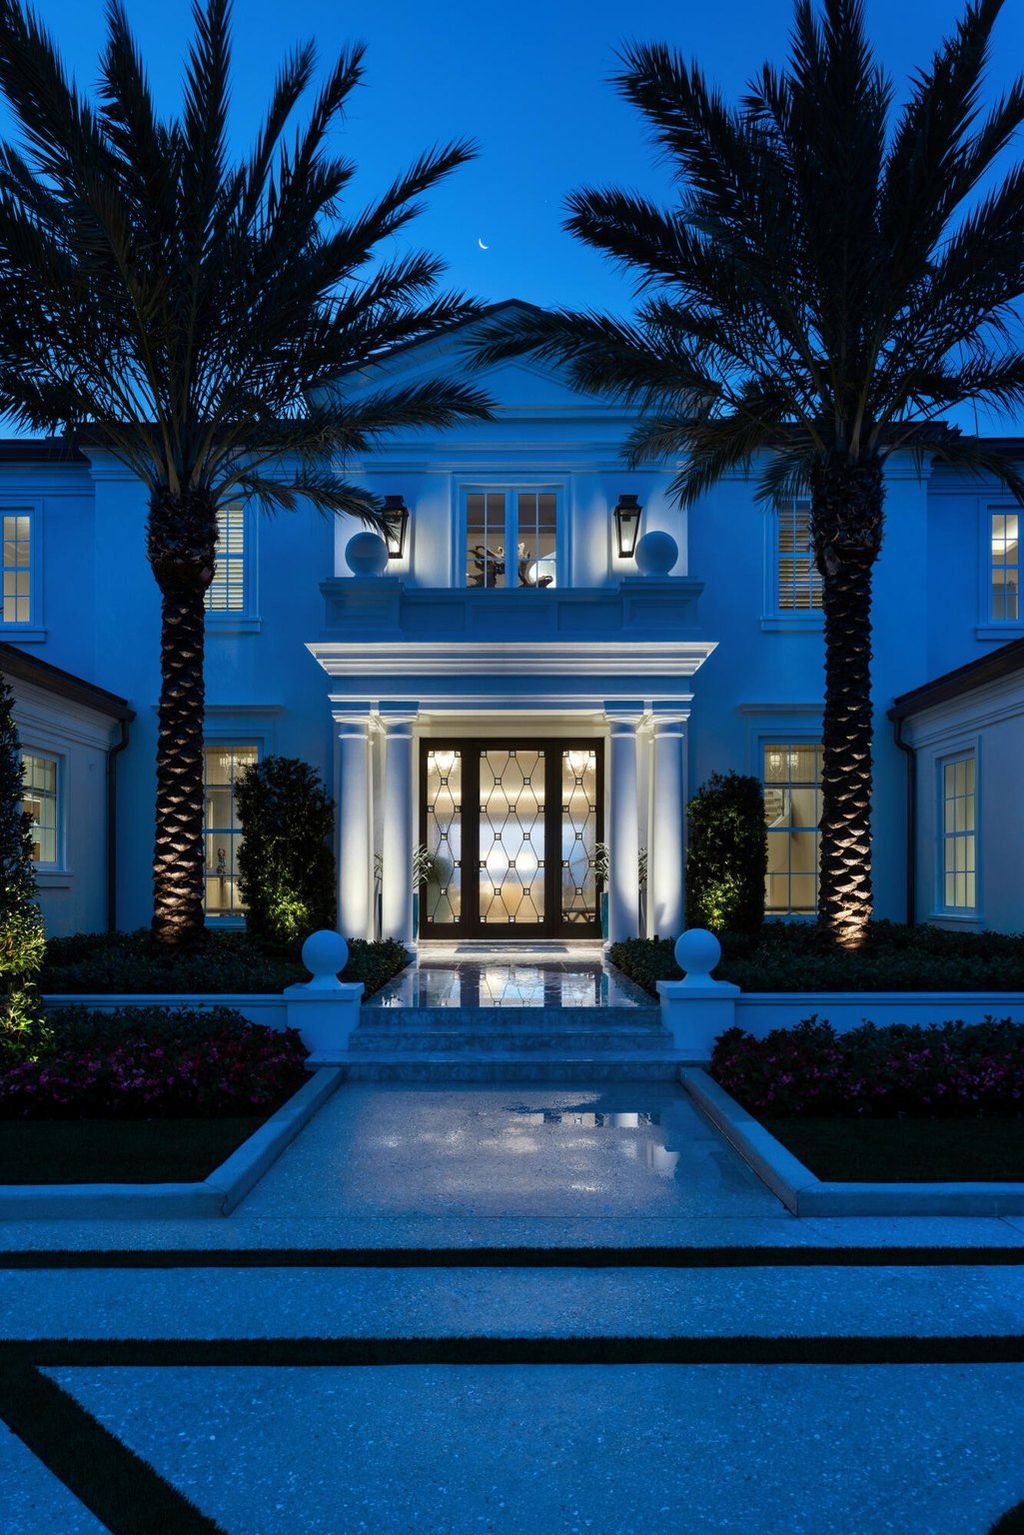 Unprecedented elegance 74 million delray beach residence by mark timothy luxury homes and jeffrey strasser interiors 45